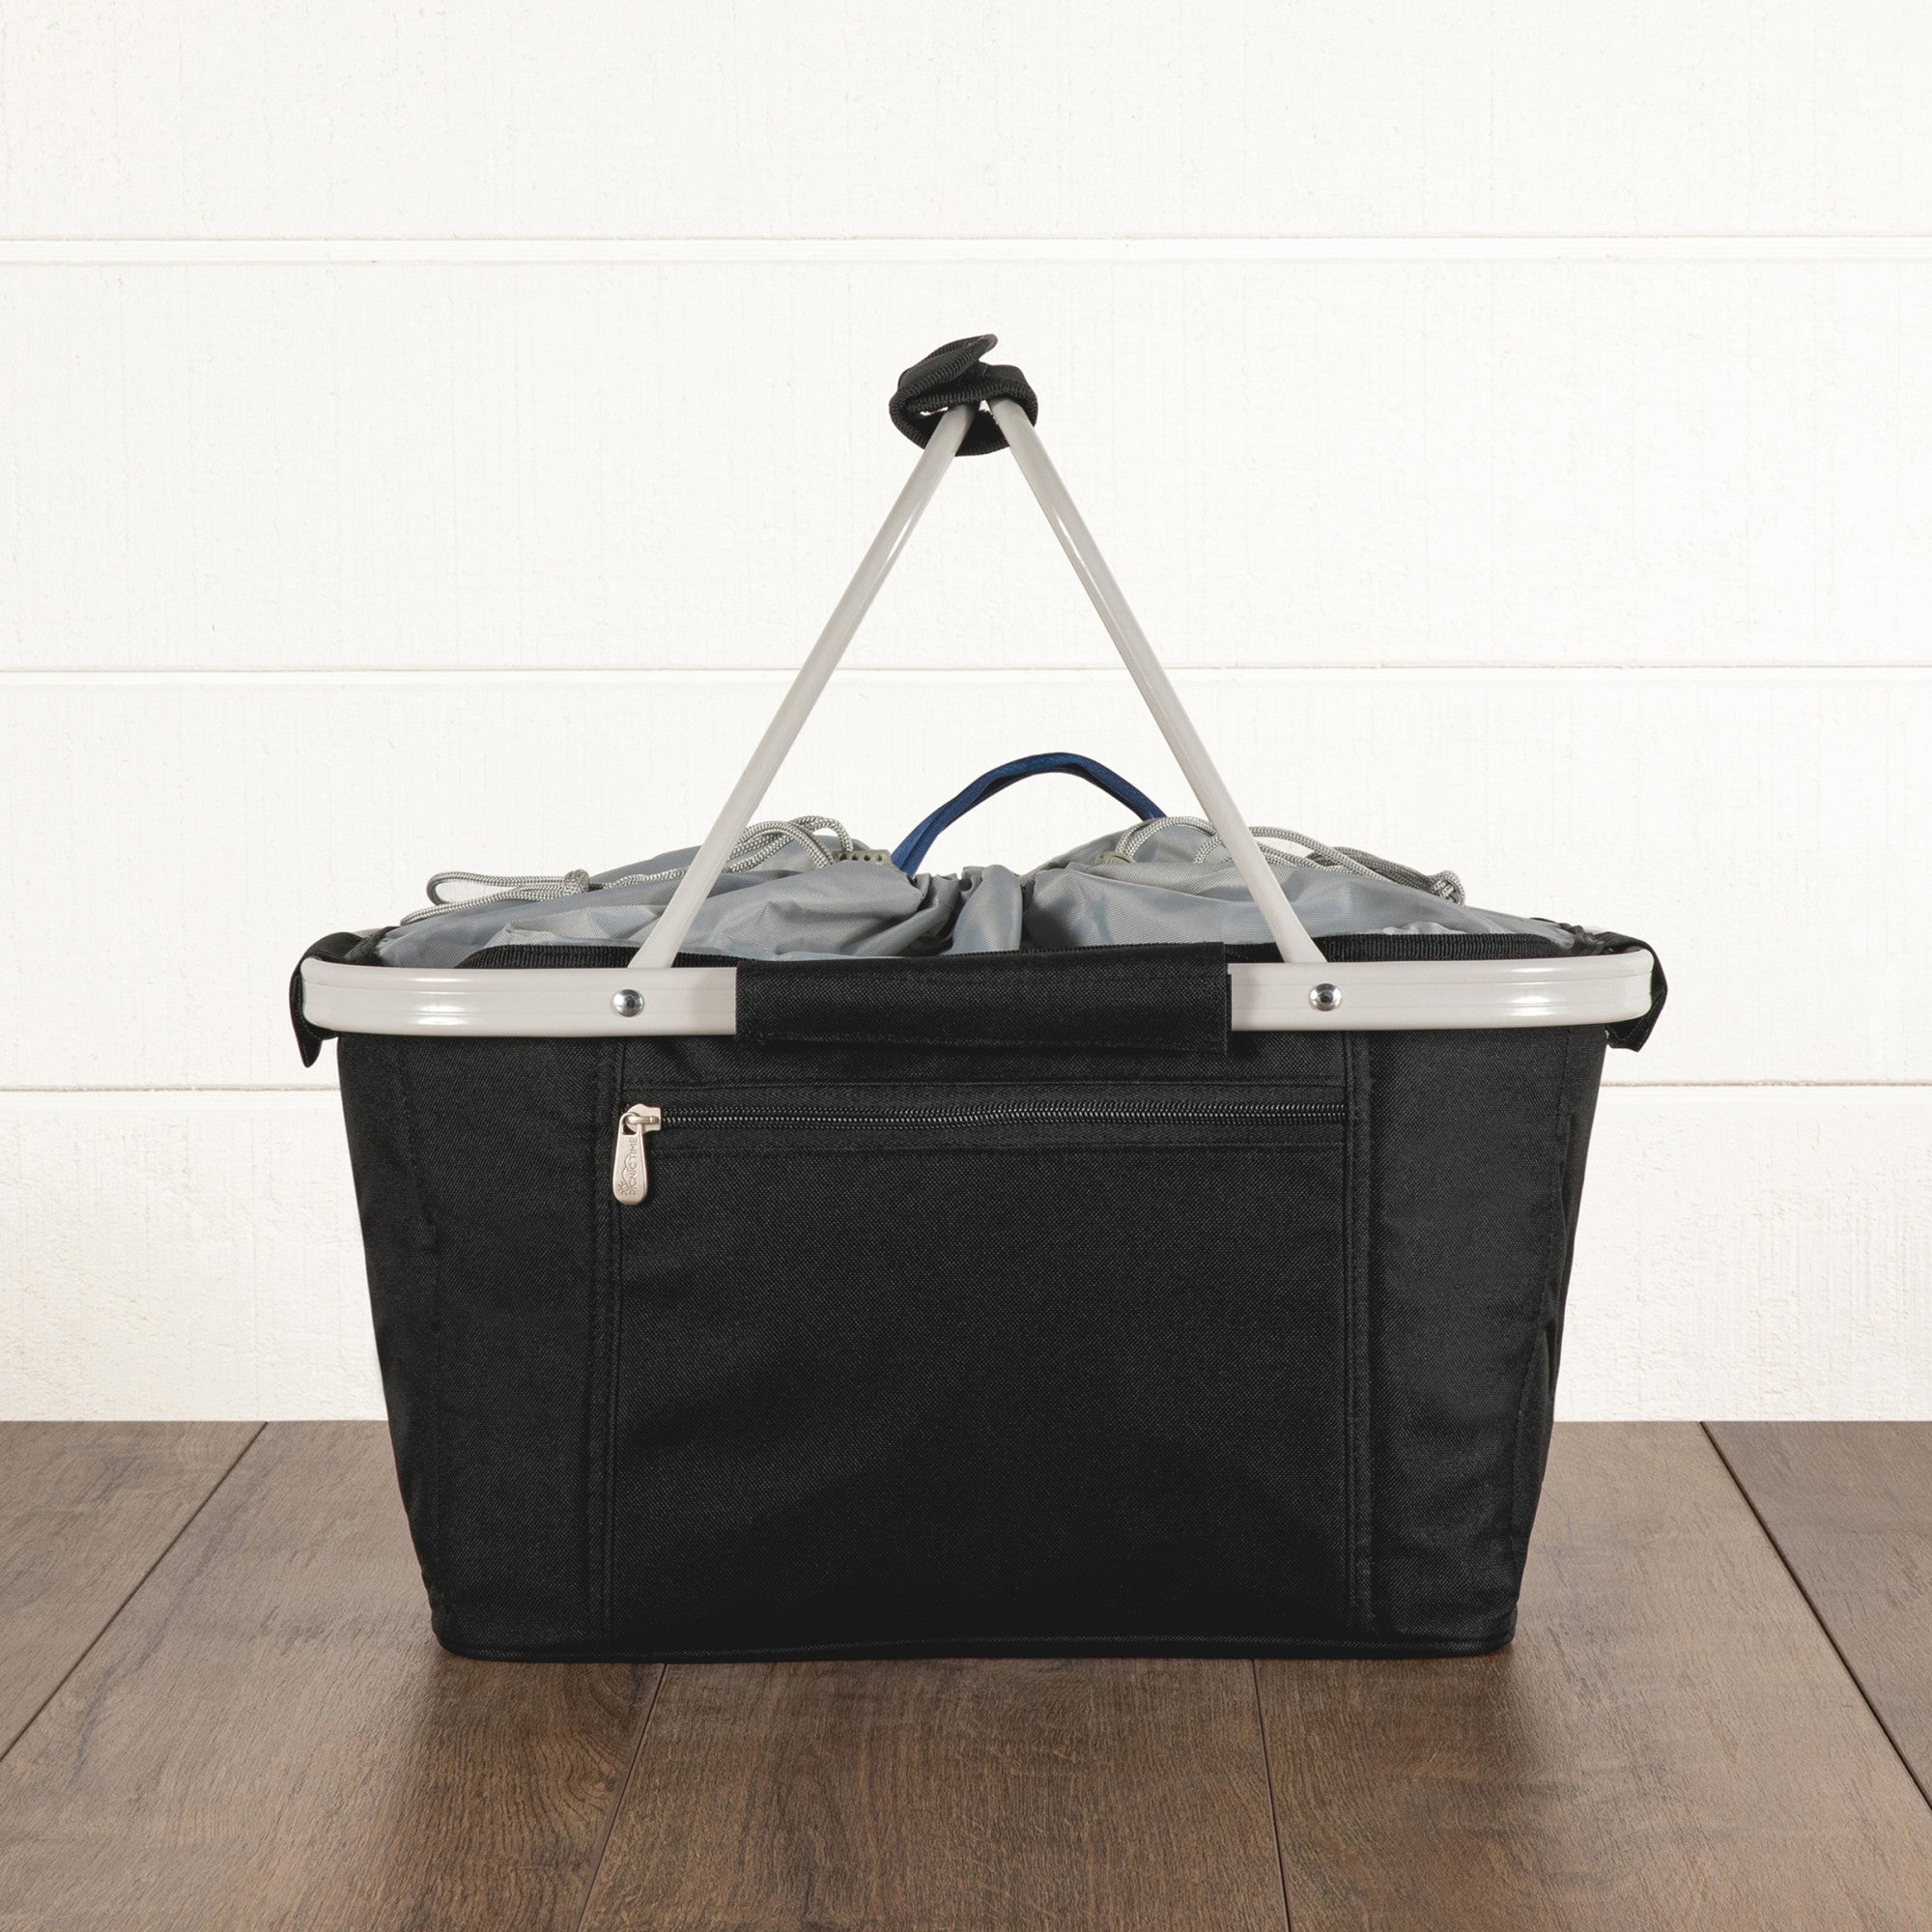 New Large Capacity Picnic Basket Outdoor Portable Picnic Bento